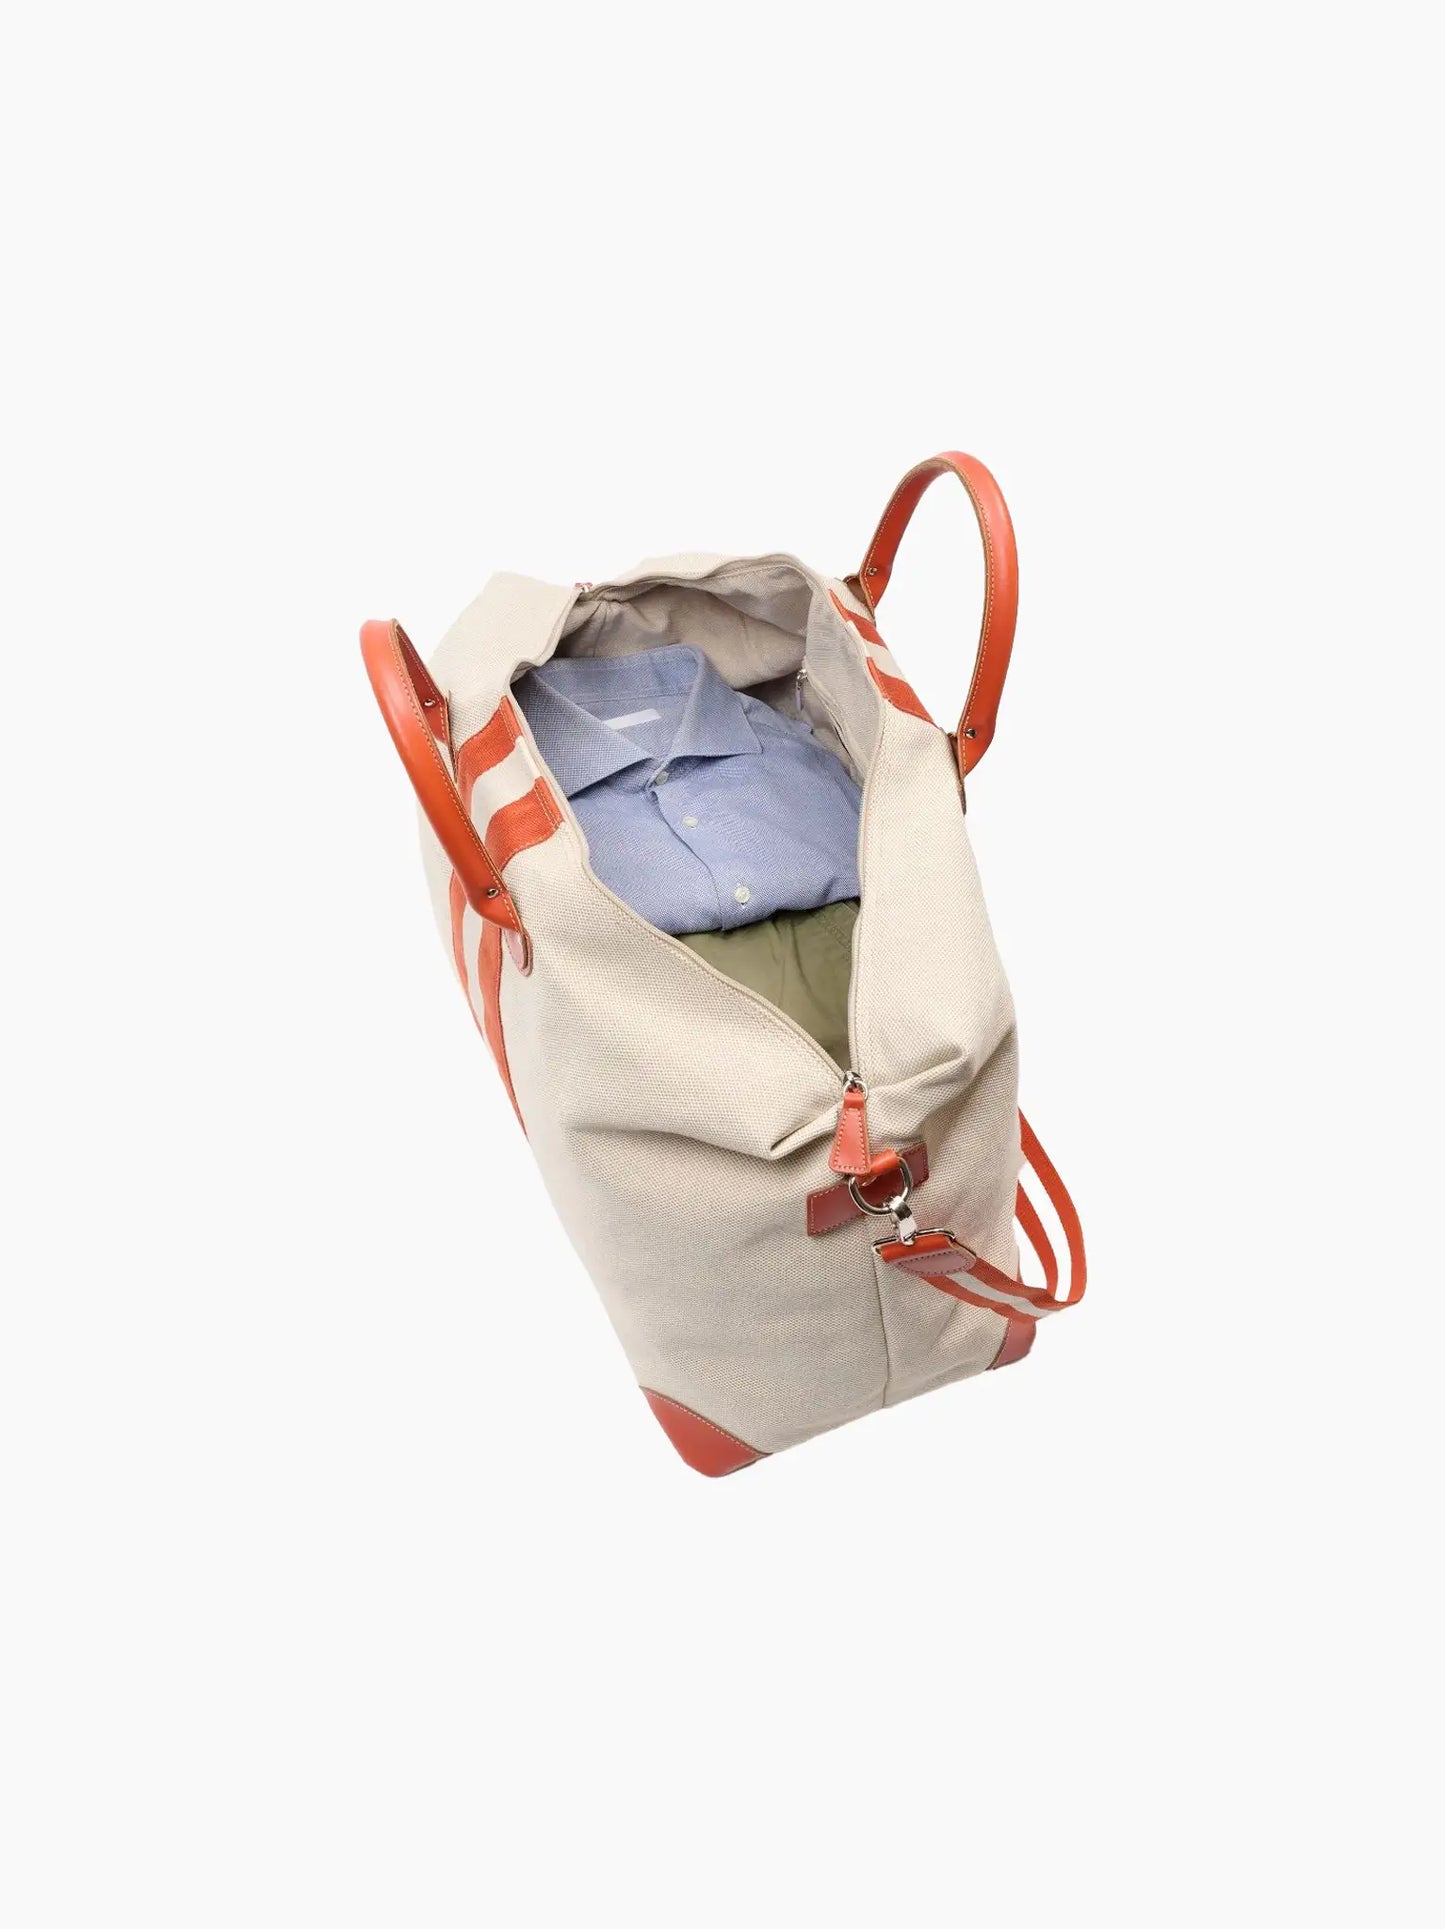 Positano Striped Travel Bag